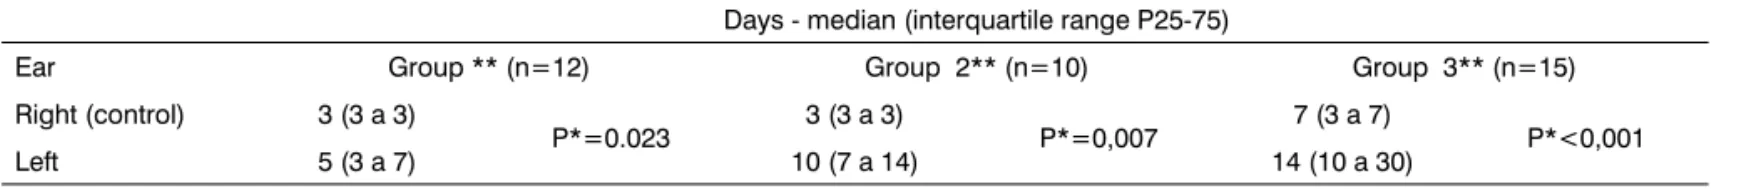 Table 1. Comparison of myringotomy healing time among groups. 